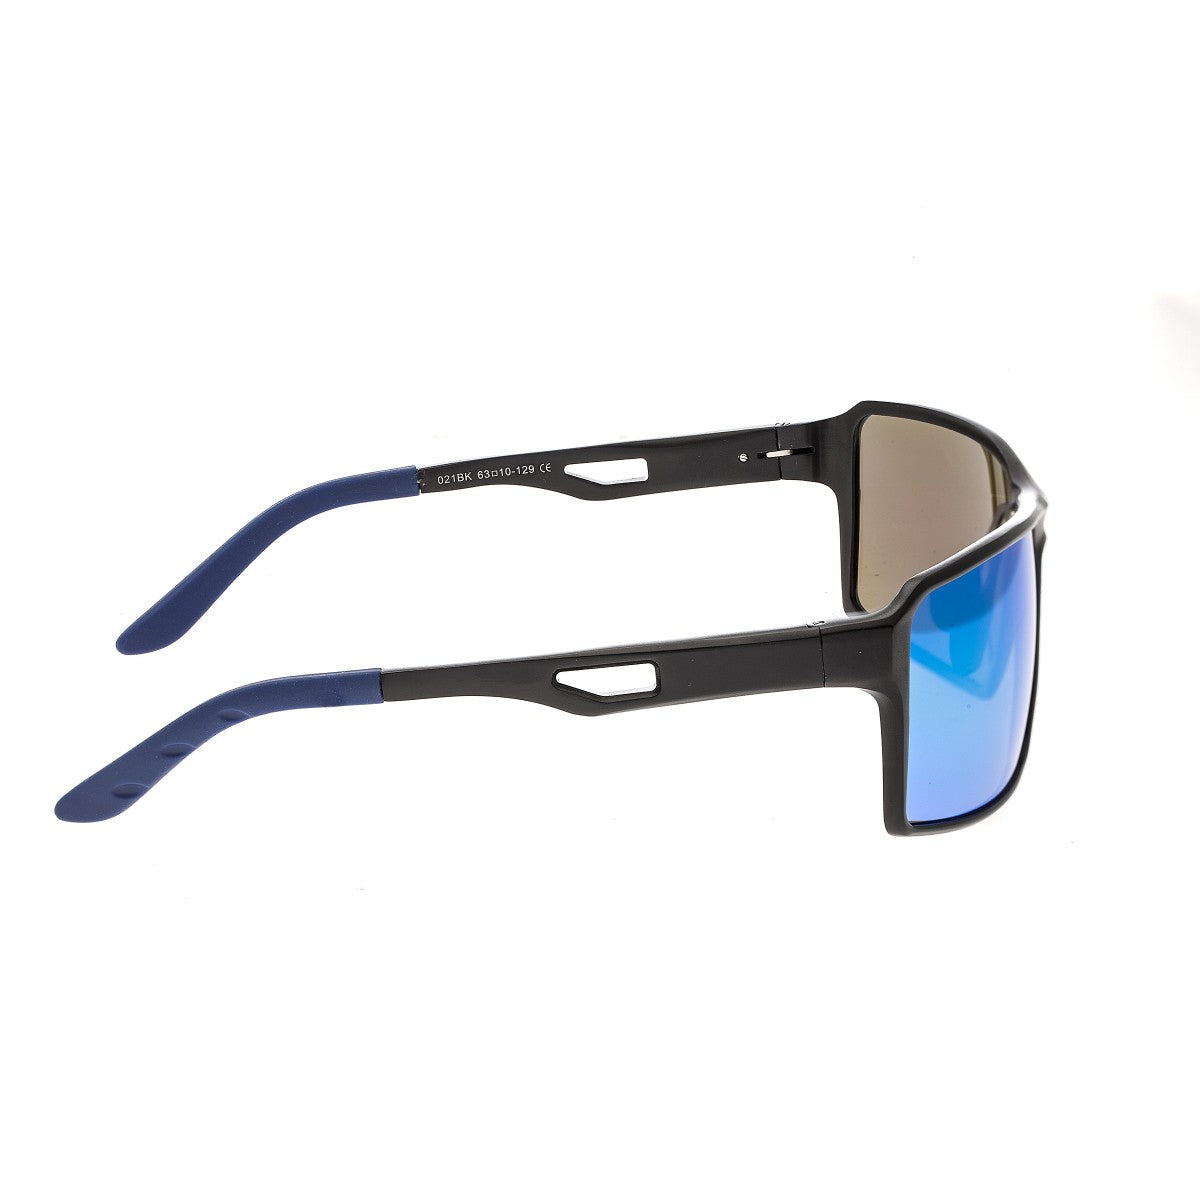 Breed Centaurus Aluminium Polarized Sunglasses - Black/Blue-Green - BSG021BK